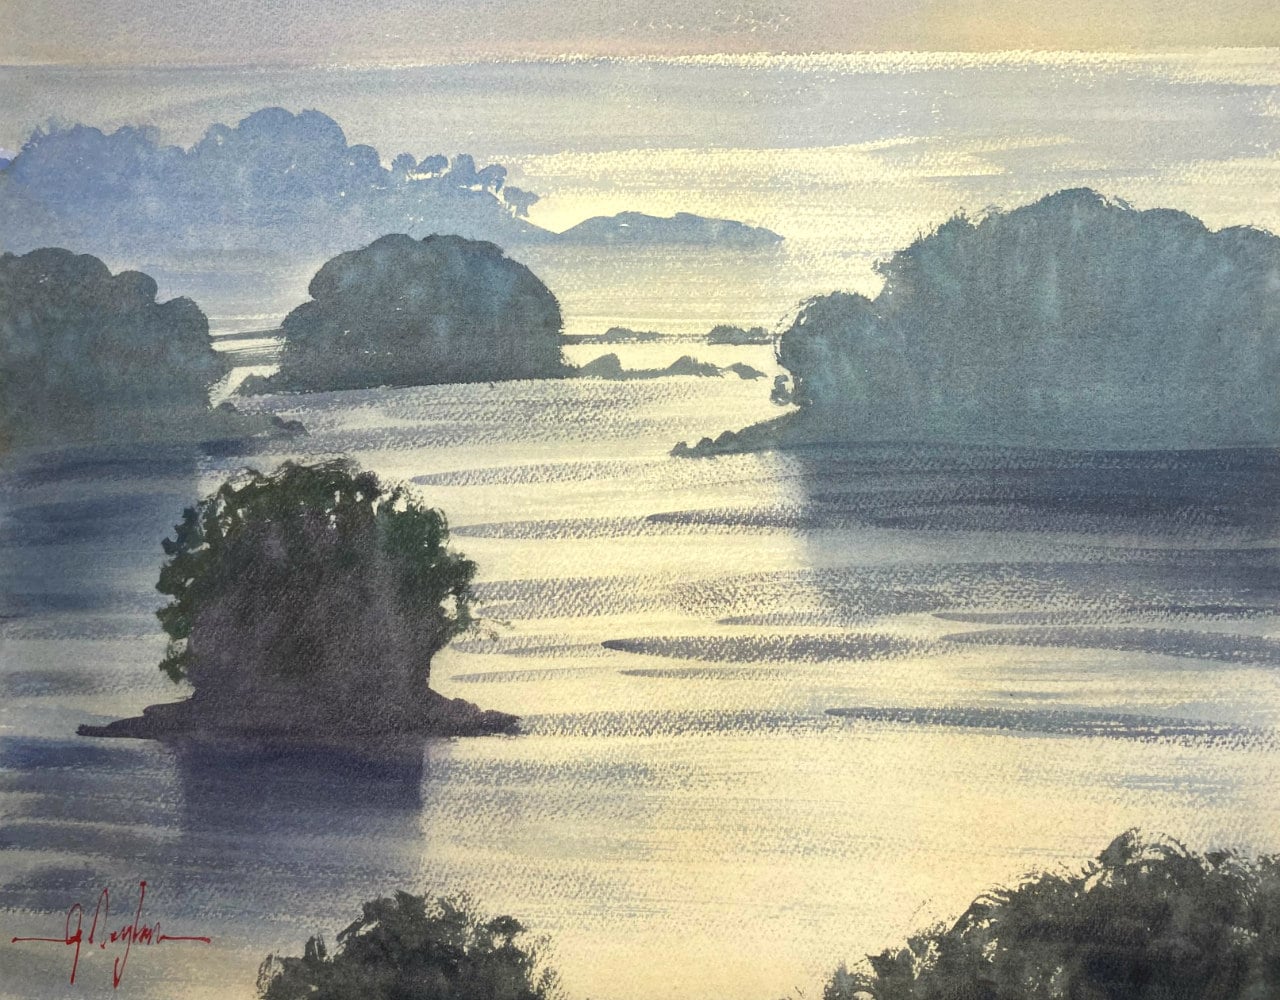 Watercolor painting of enchanting Japanese islands